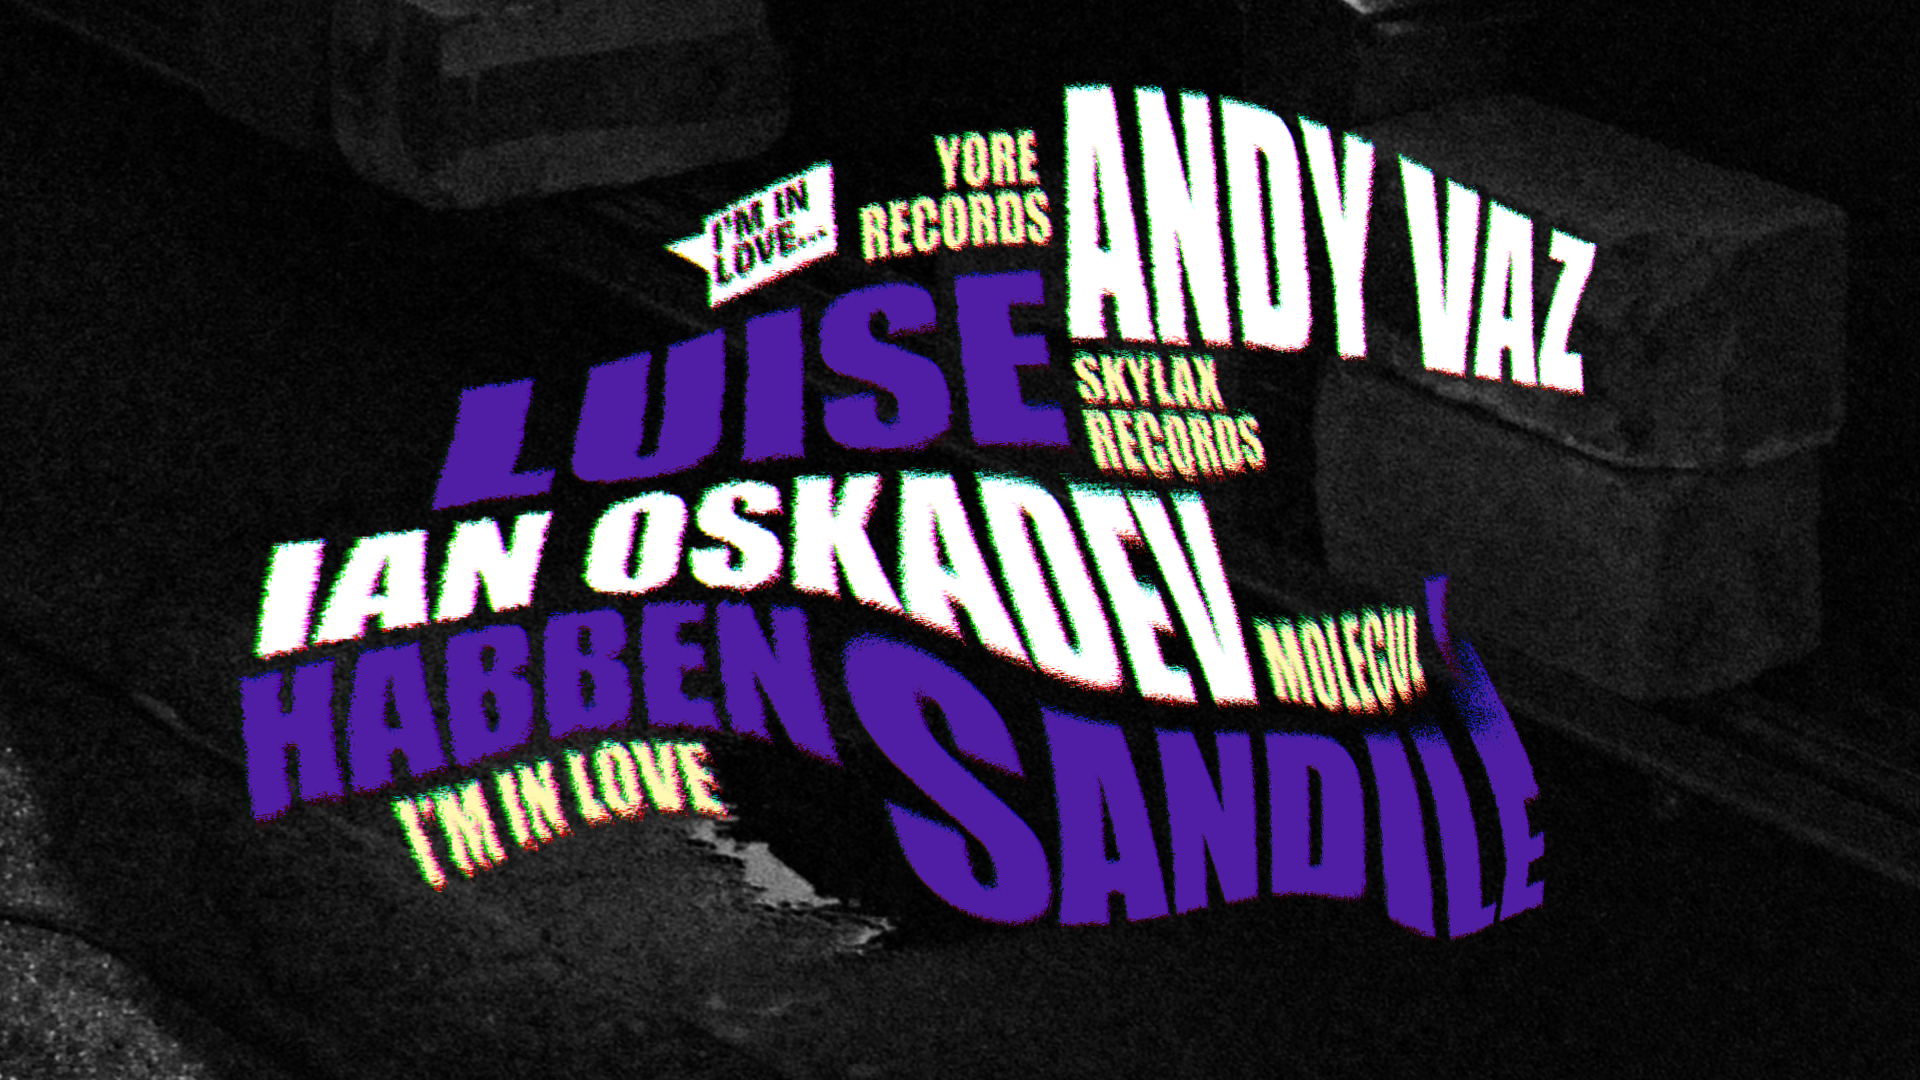 I'm in Love mit Andy Vaz, Luise, Ian Oskadev, Sandilé & Habben - フライヤー表